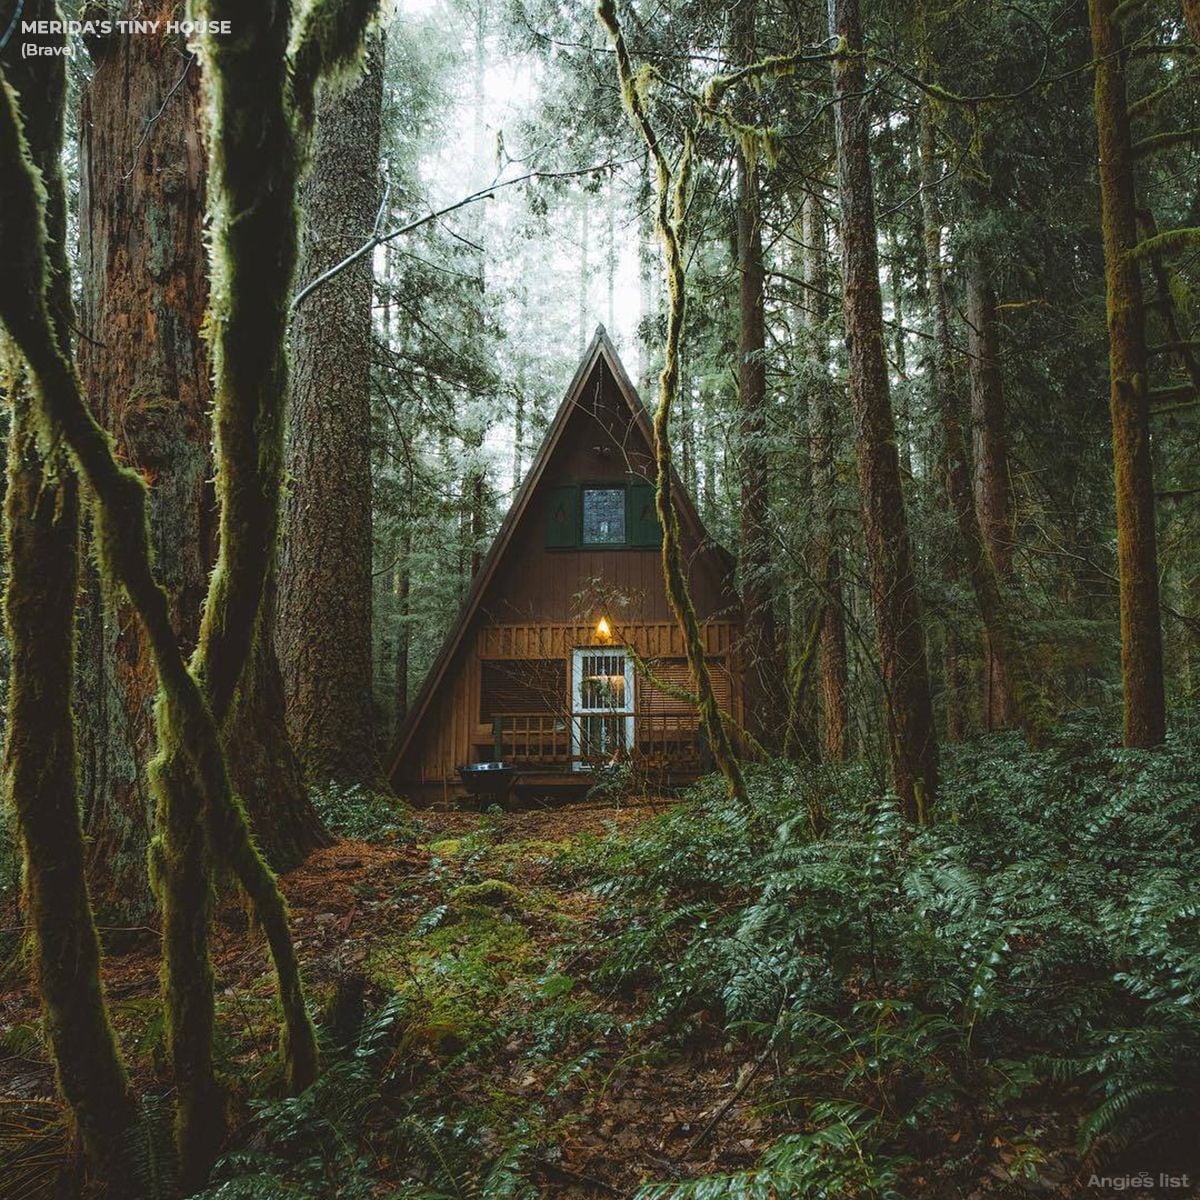 The cabin-like exterior of Princess Merida's tiny home (Brave).